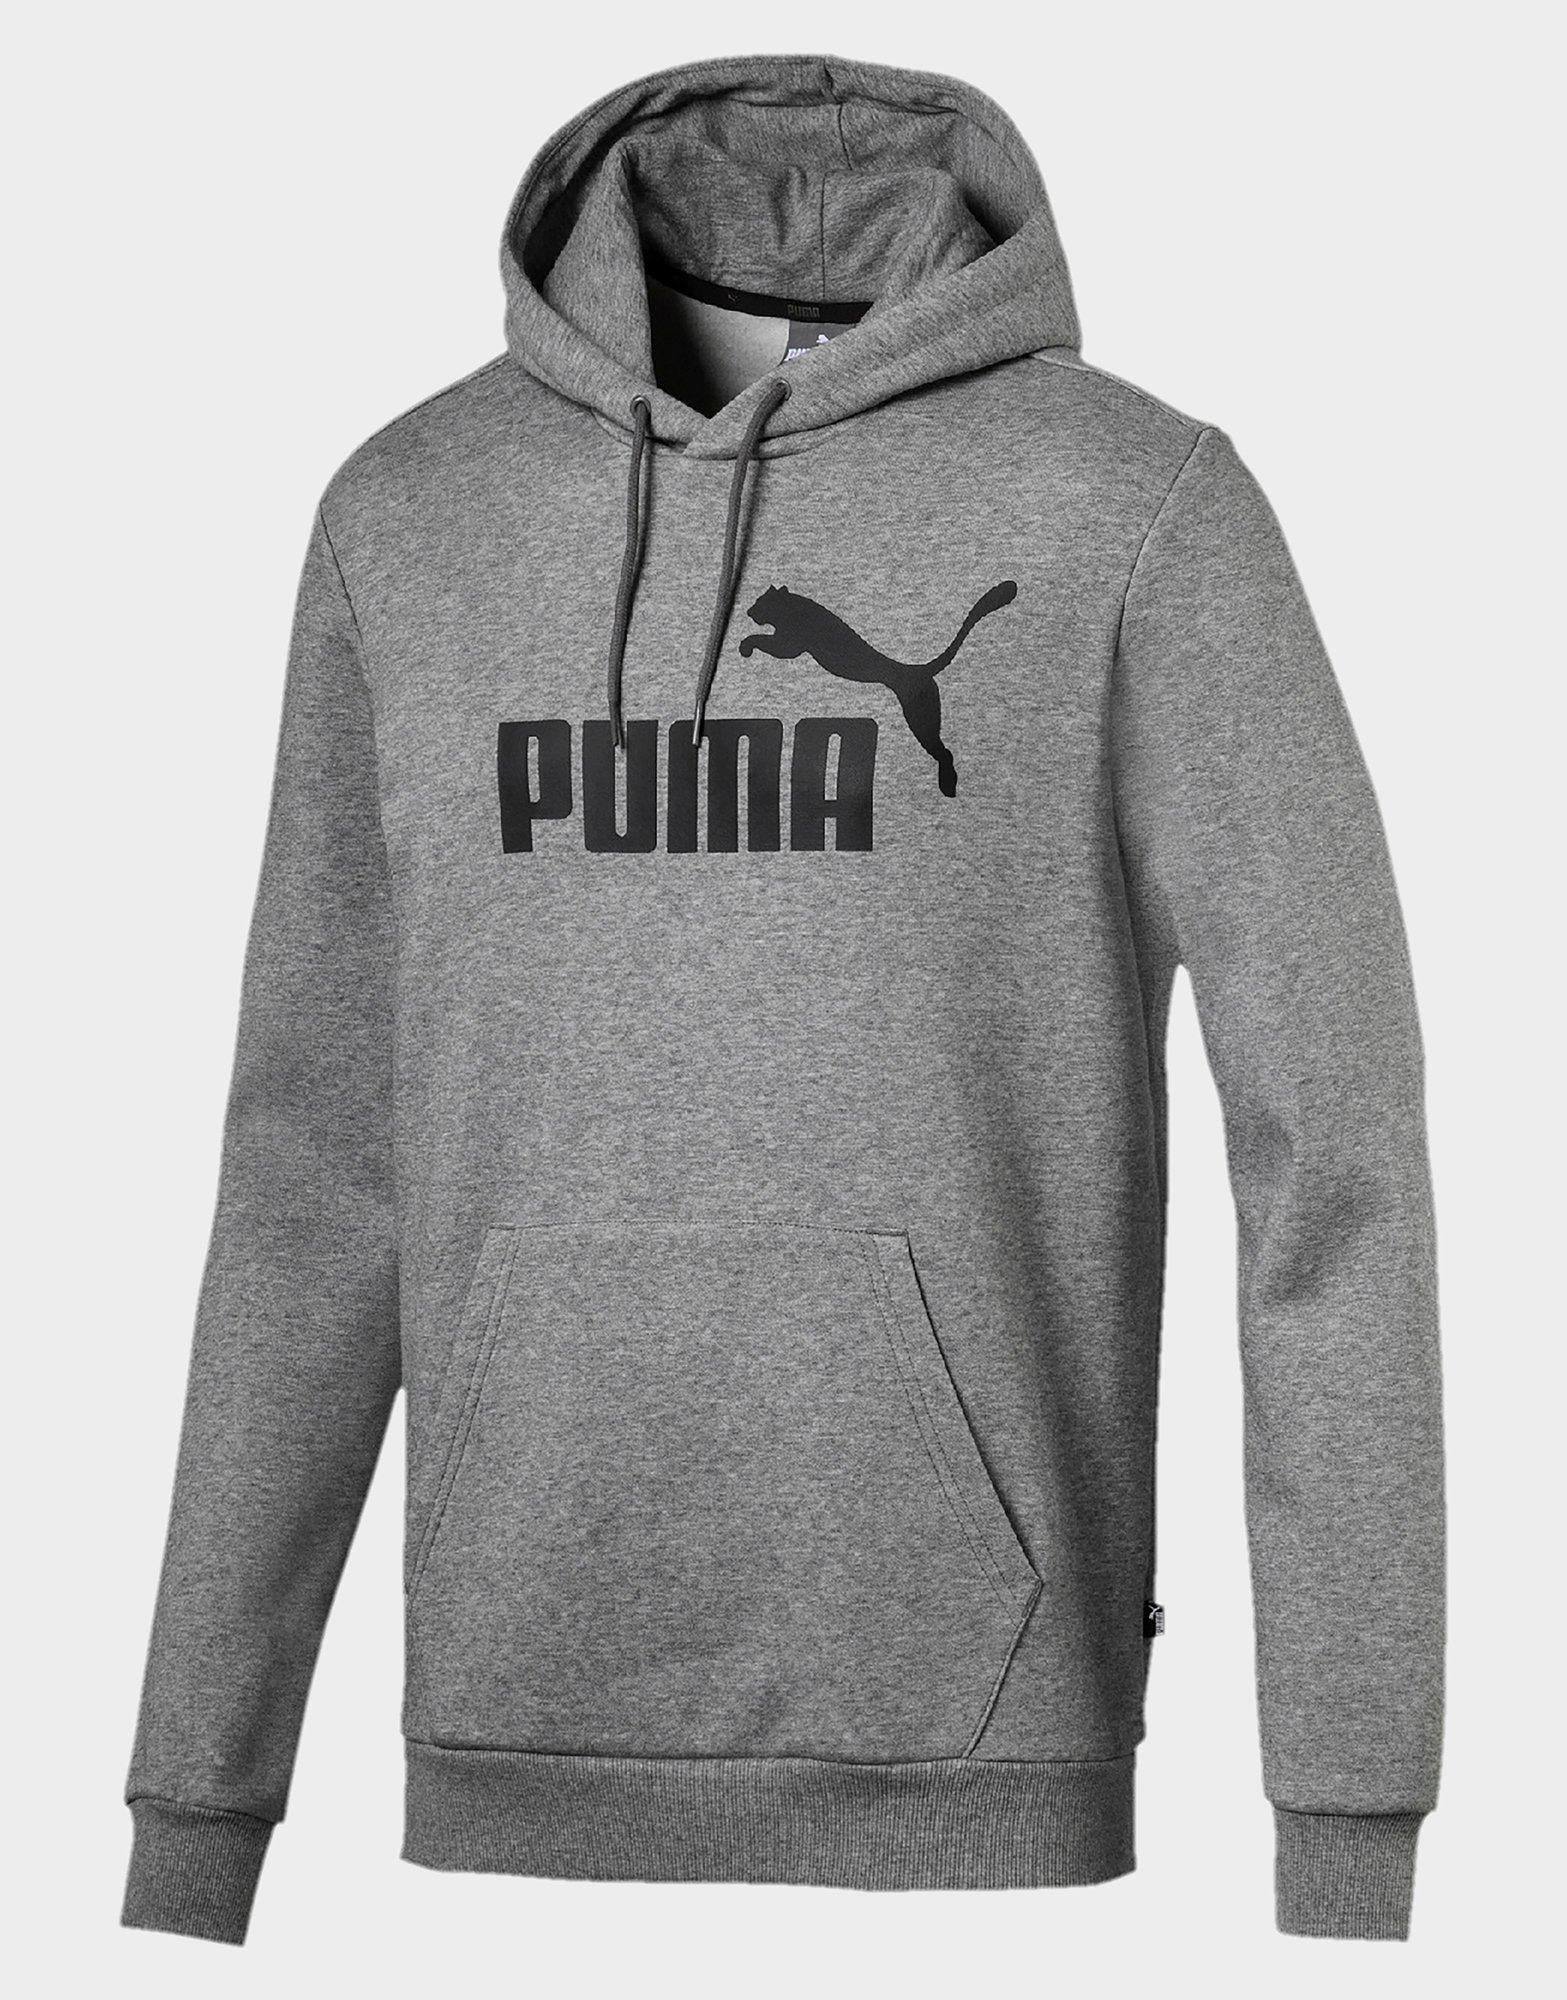 grey puma sweatshirt